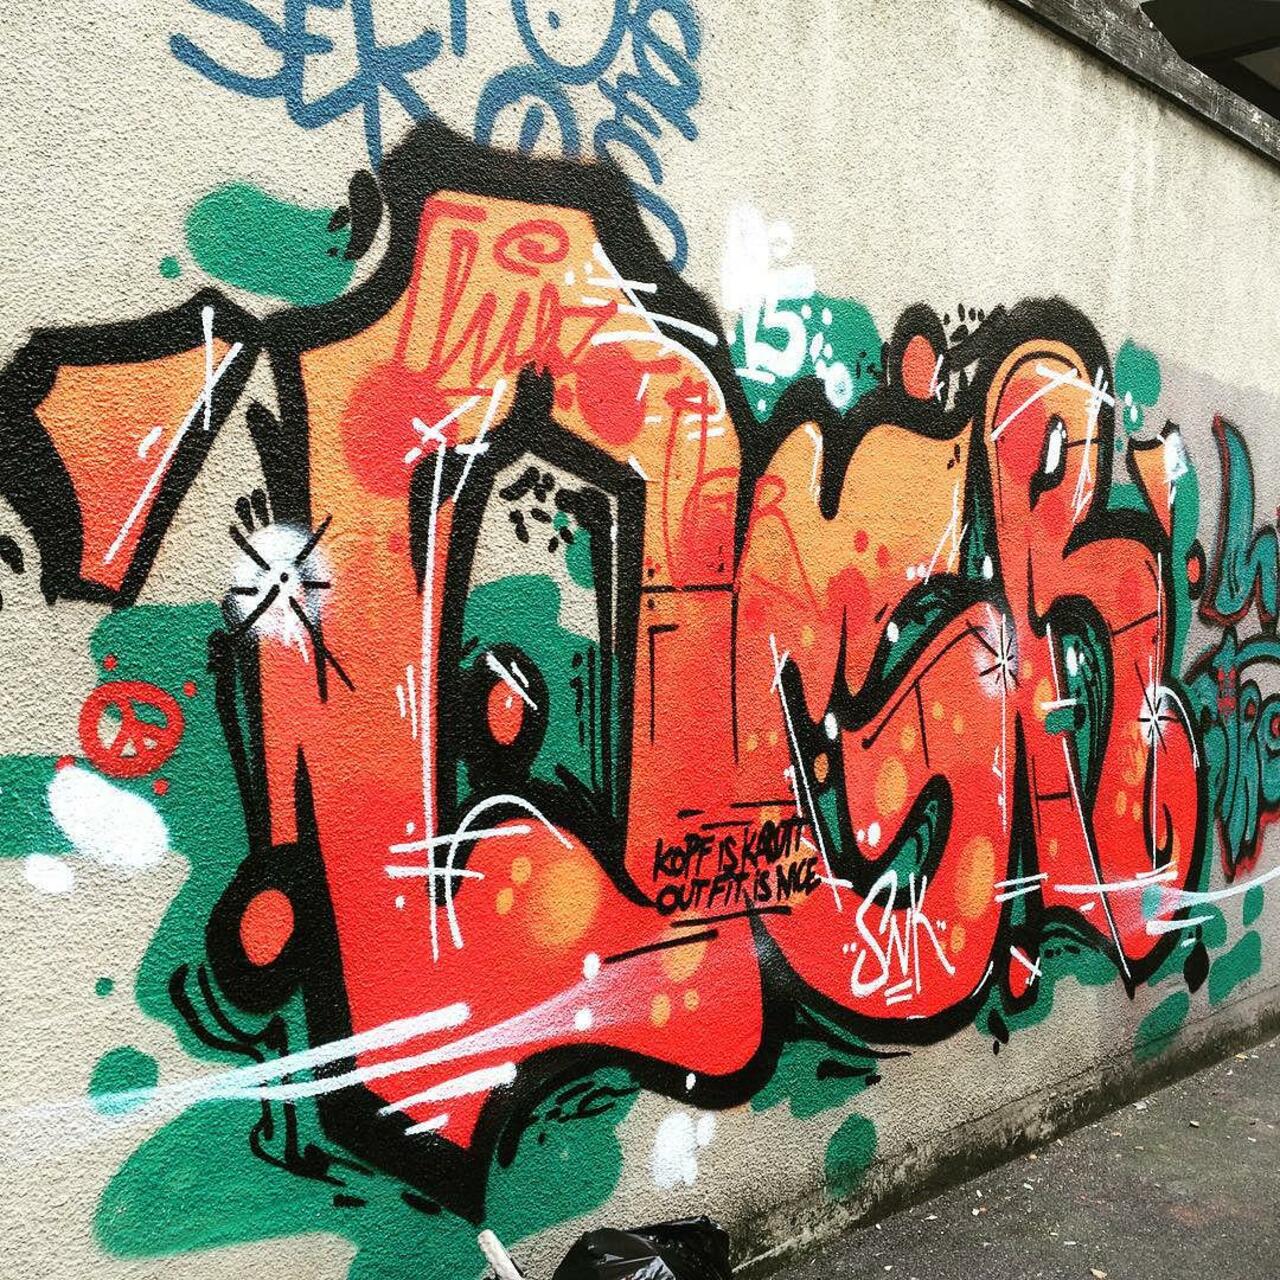 #Paris #graffiti photo by @elricoelmagnifico http://ift.tt/1MyGjo4 #StreetArt https://t.co/bwy6XgyQM6